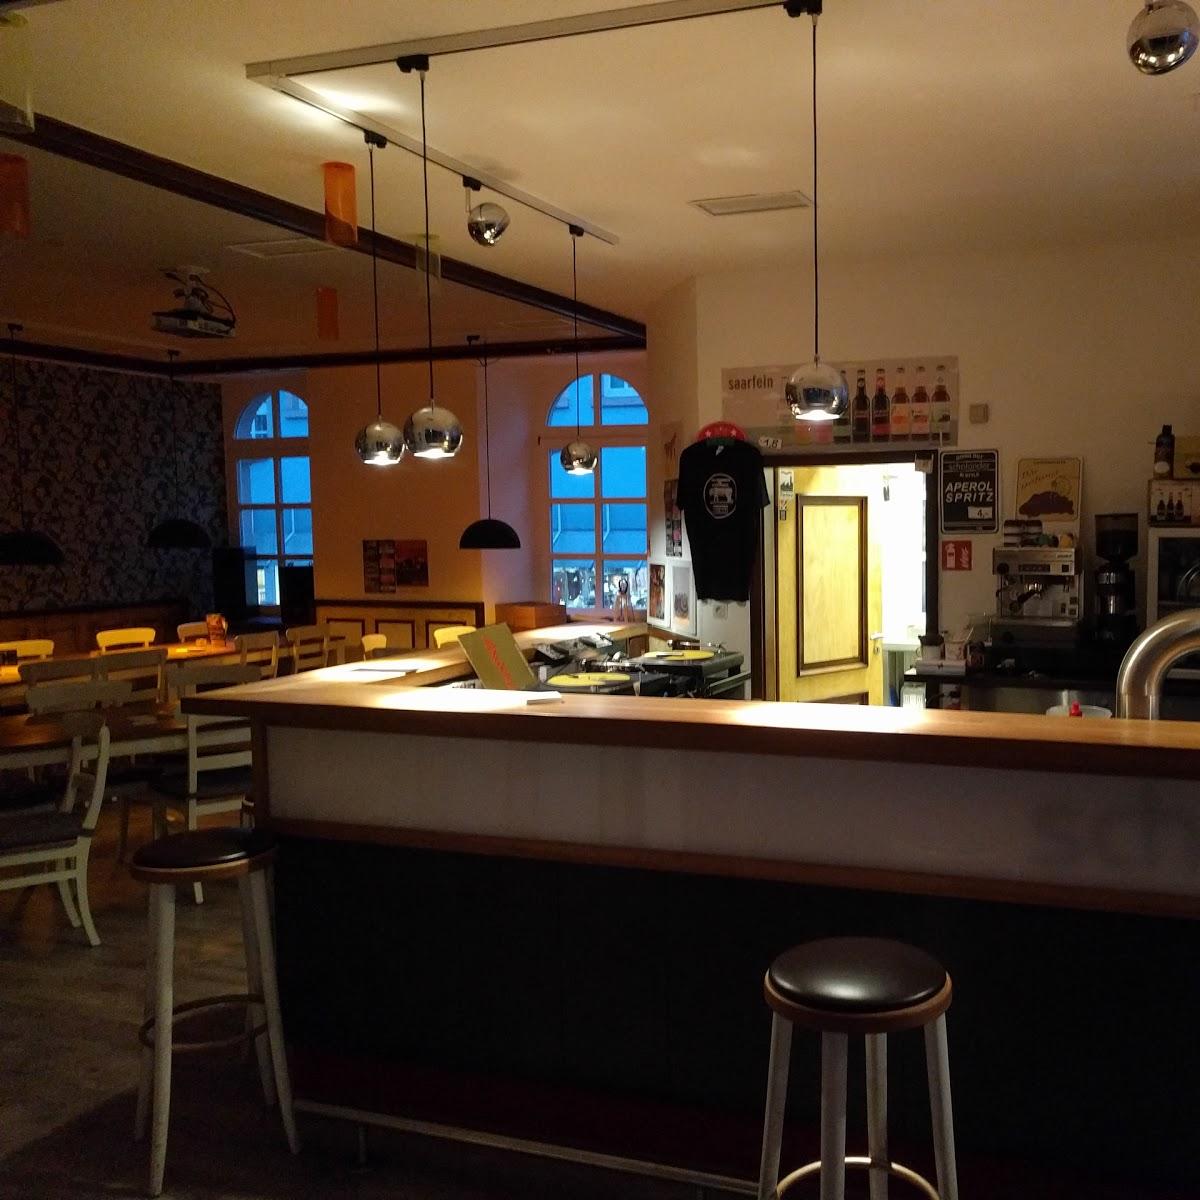 Restaurant "Schalander" in Kusel